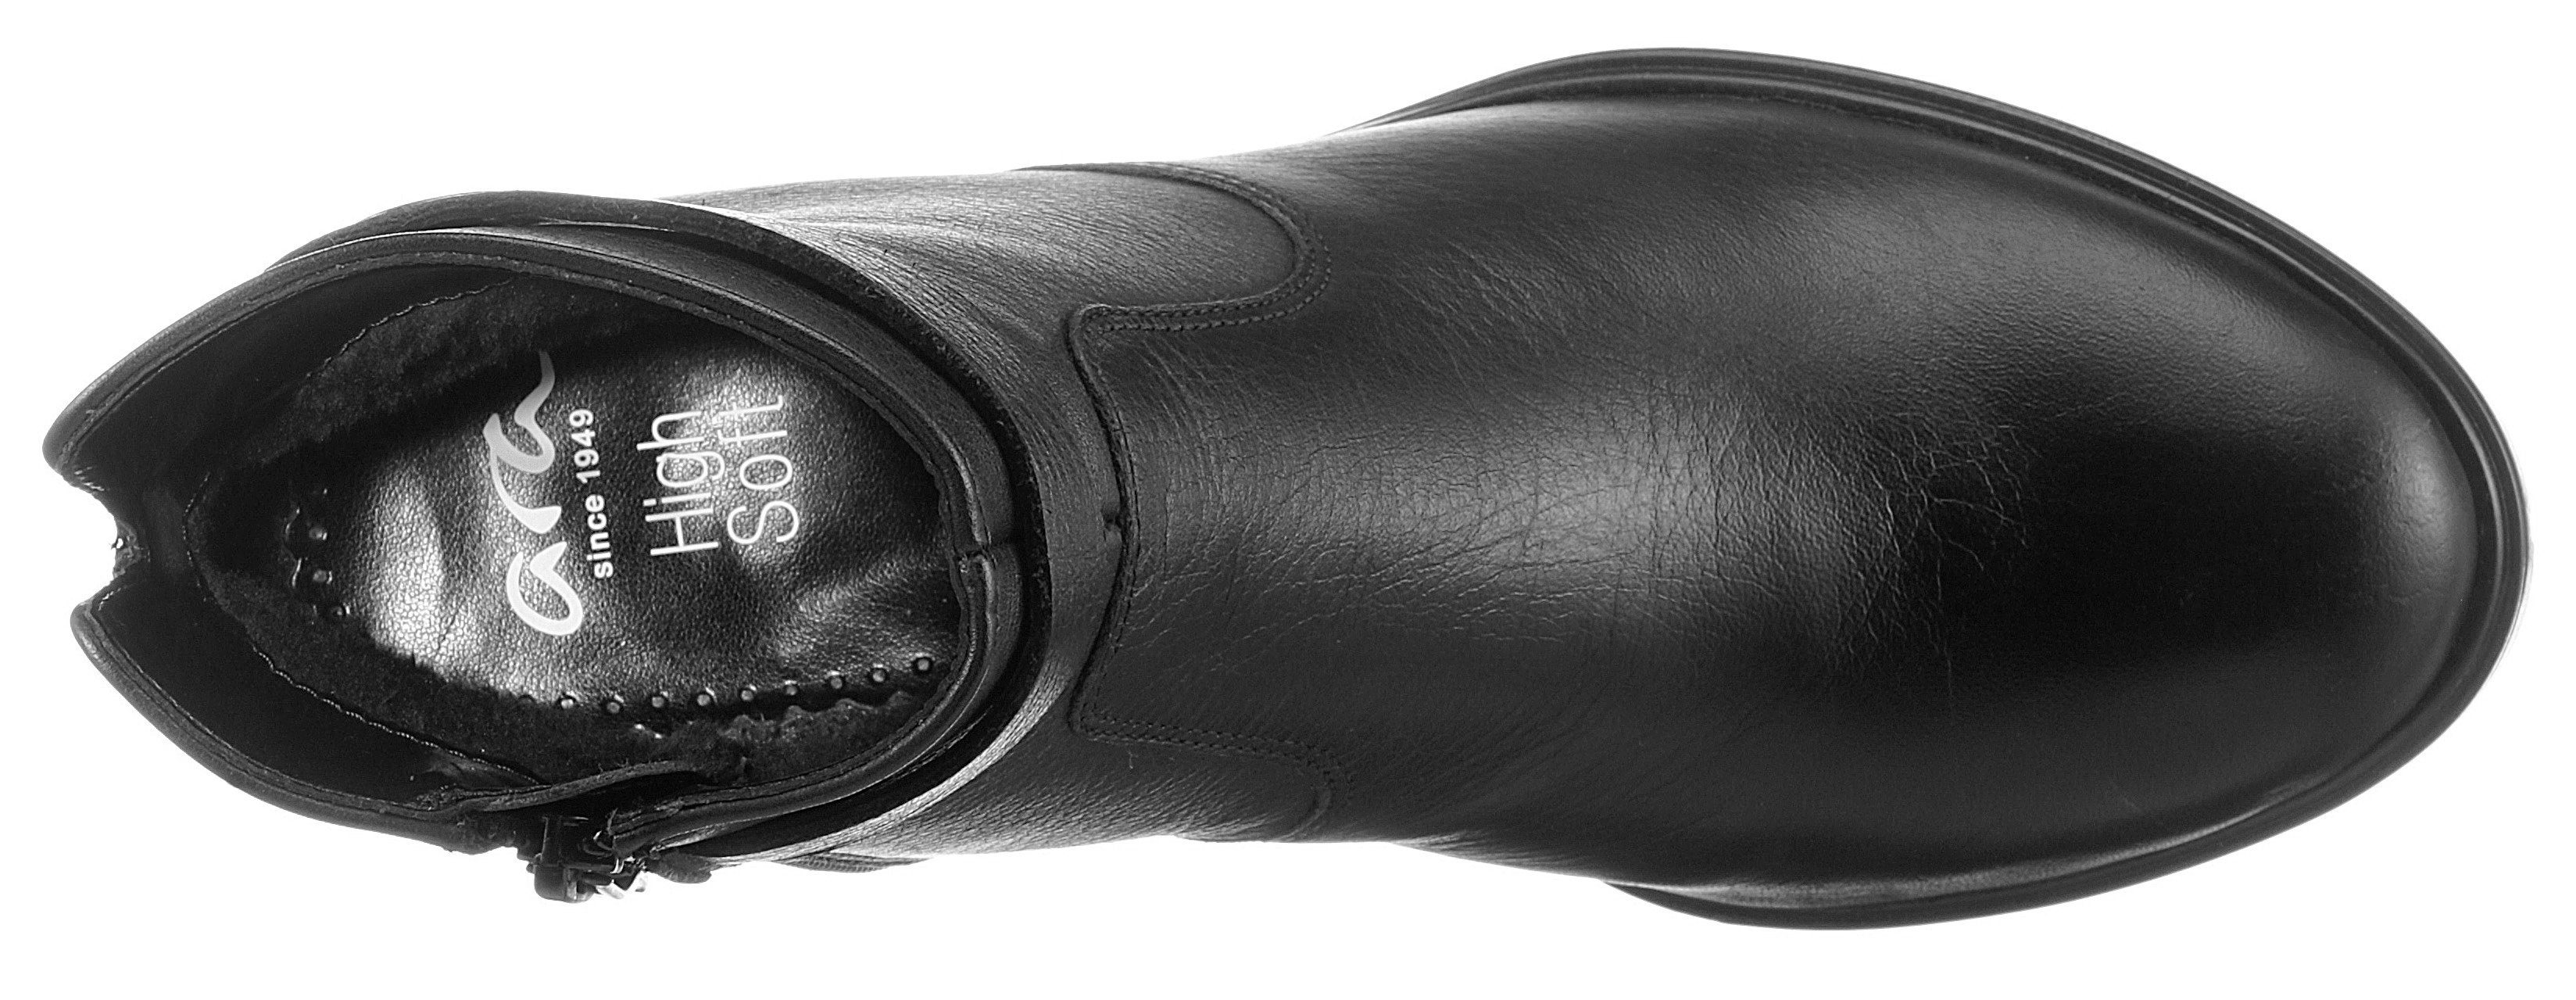 Stiefelette RONDA schwarz in G-Weite Ara klassischer Optik,